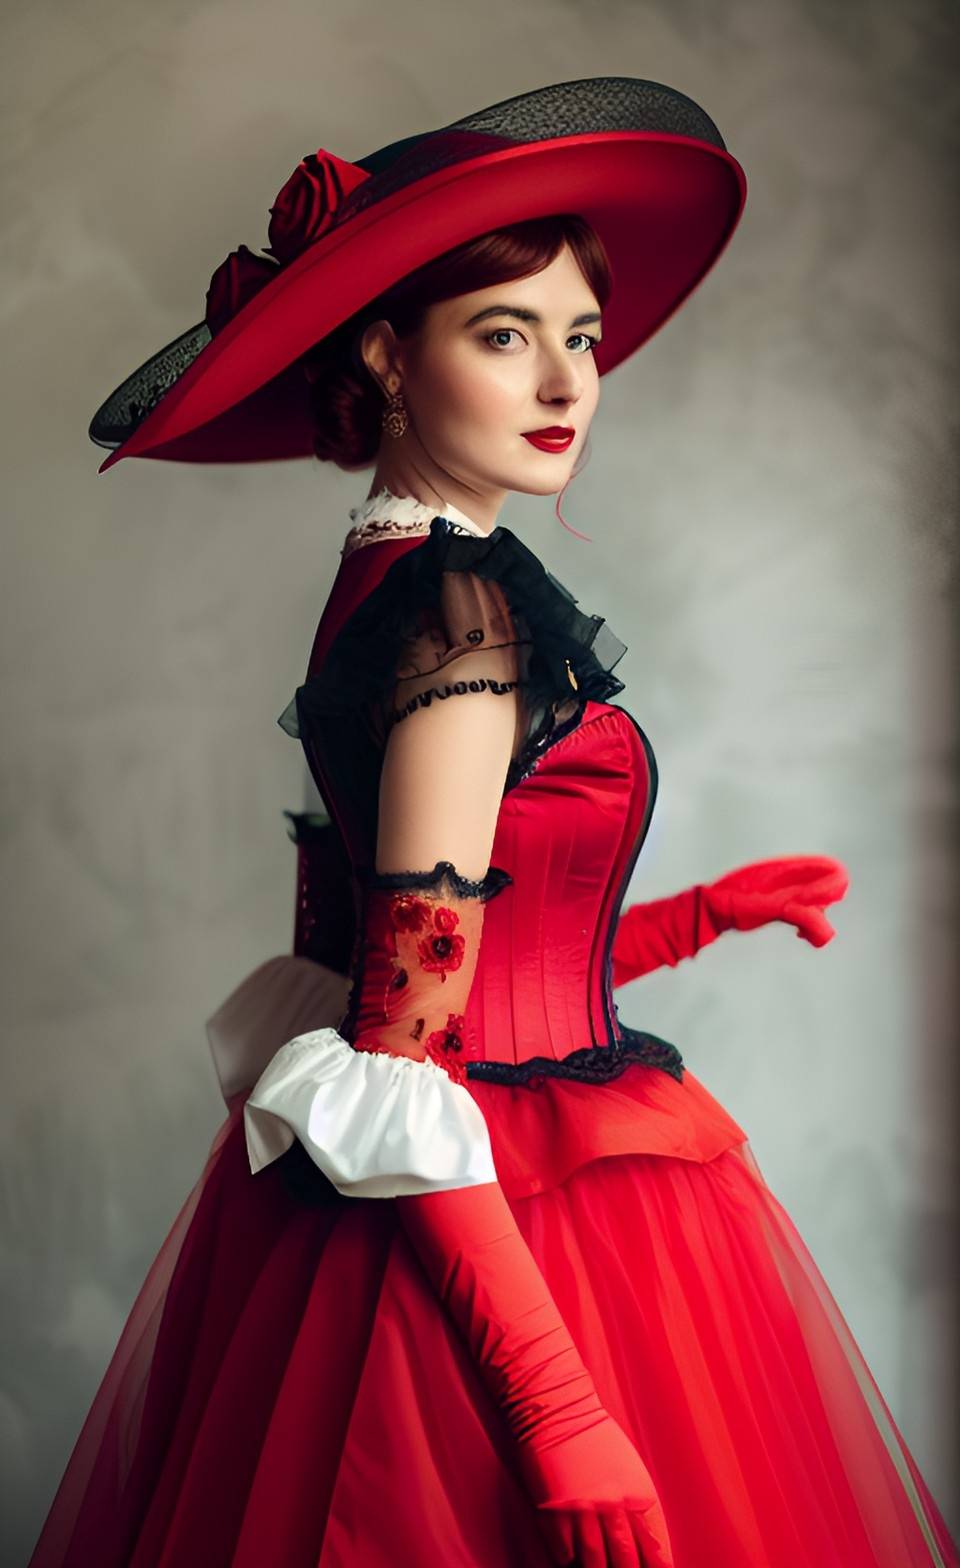 Red corset 2 by setareham on DeviantArt